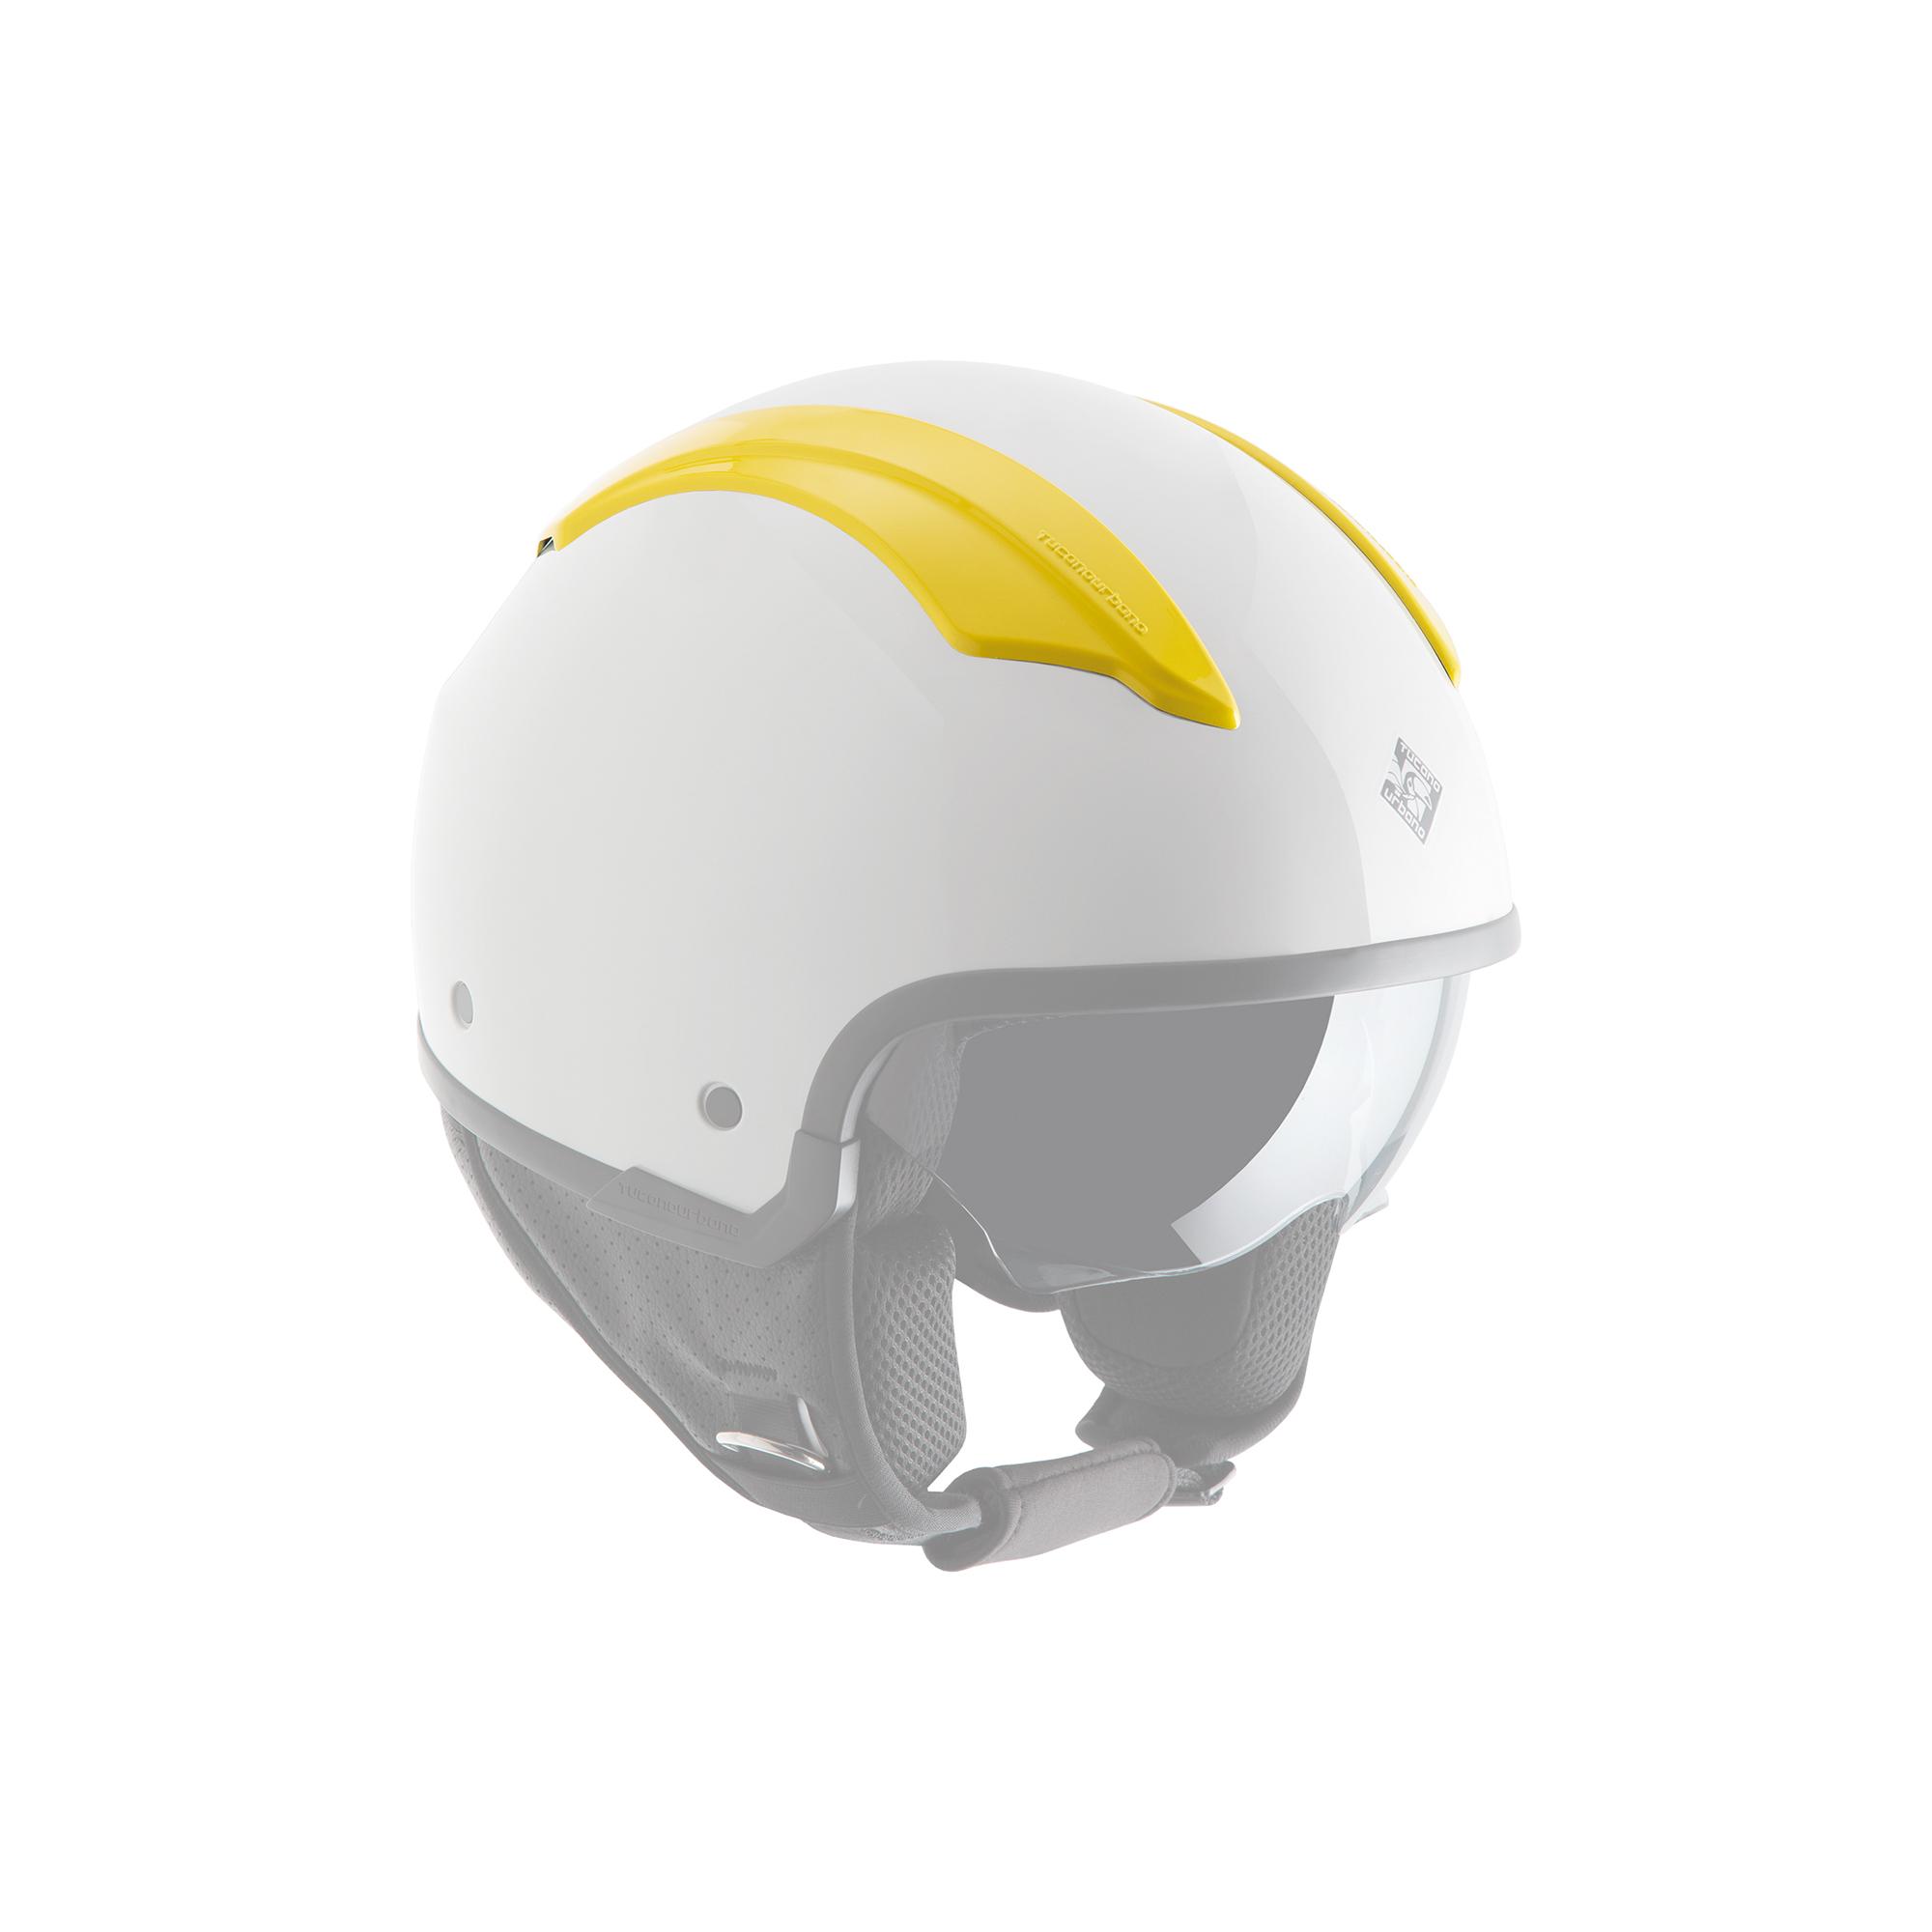 Air–ventilation Covering For El'fresh And El'top Helmet Glossy Toucan Yellow Tucano Urbano